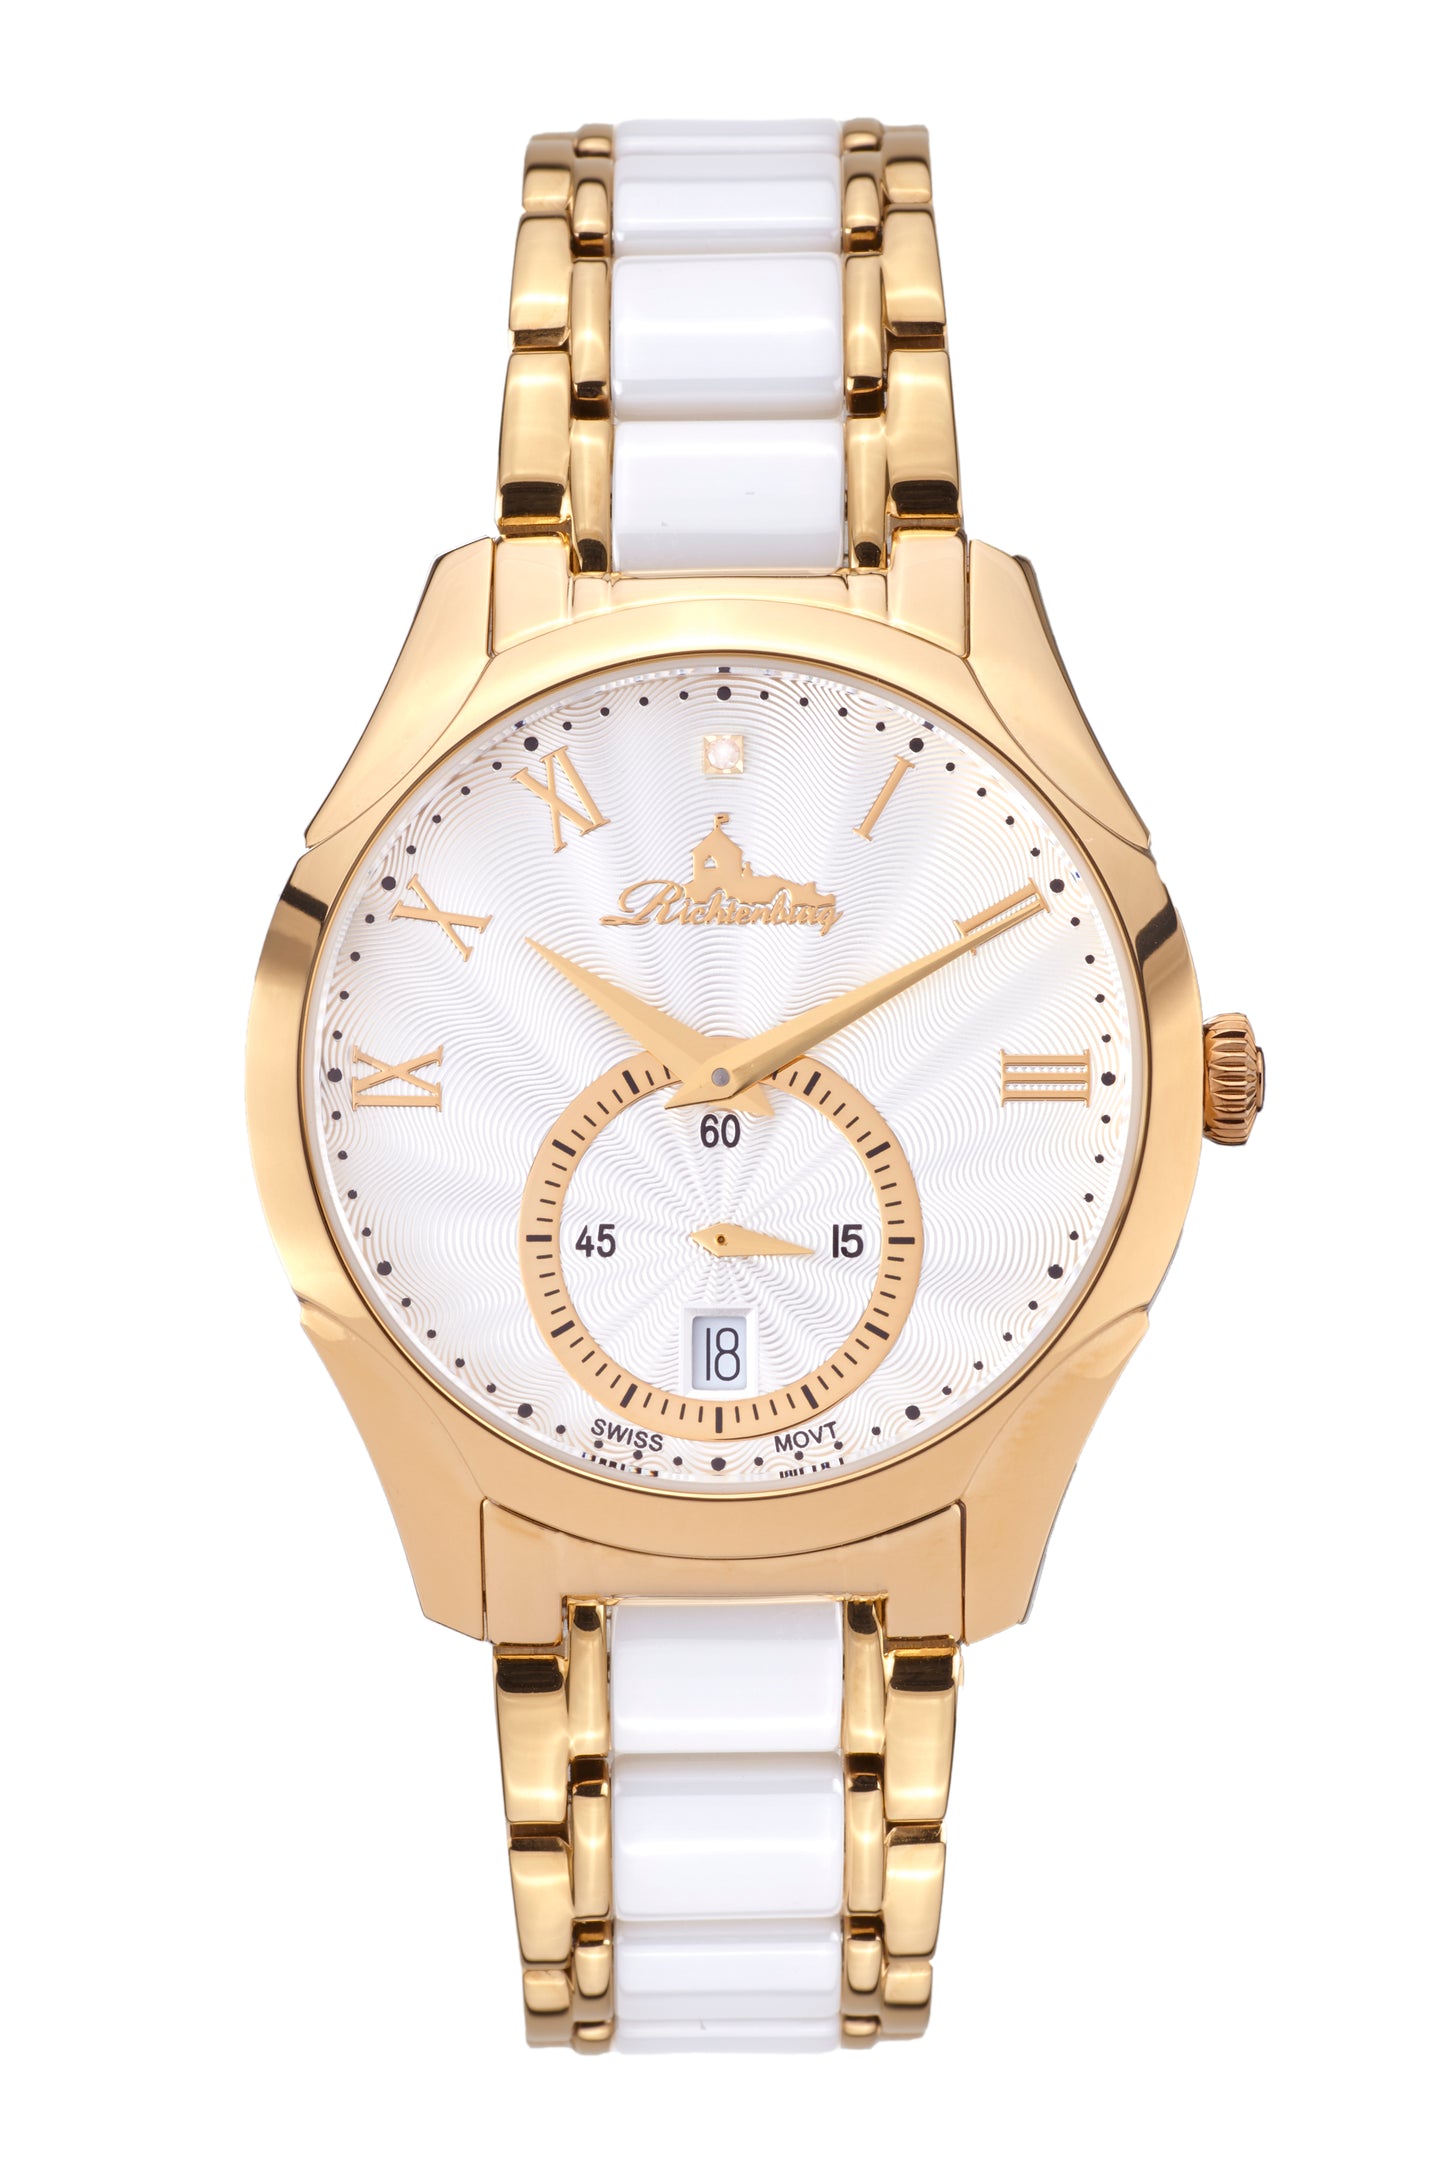 Automatic watches — Belana — Richtenburg — rosegold IP ceramic white silver